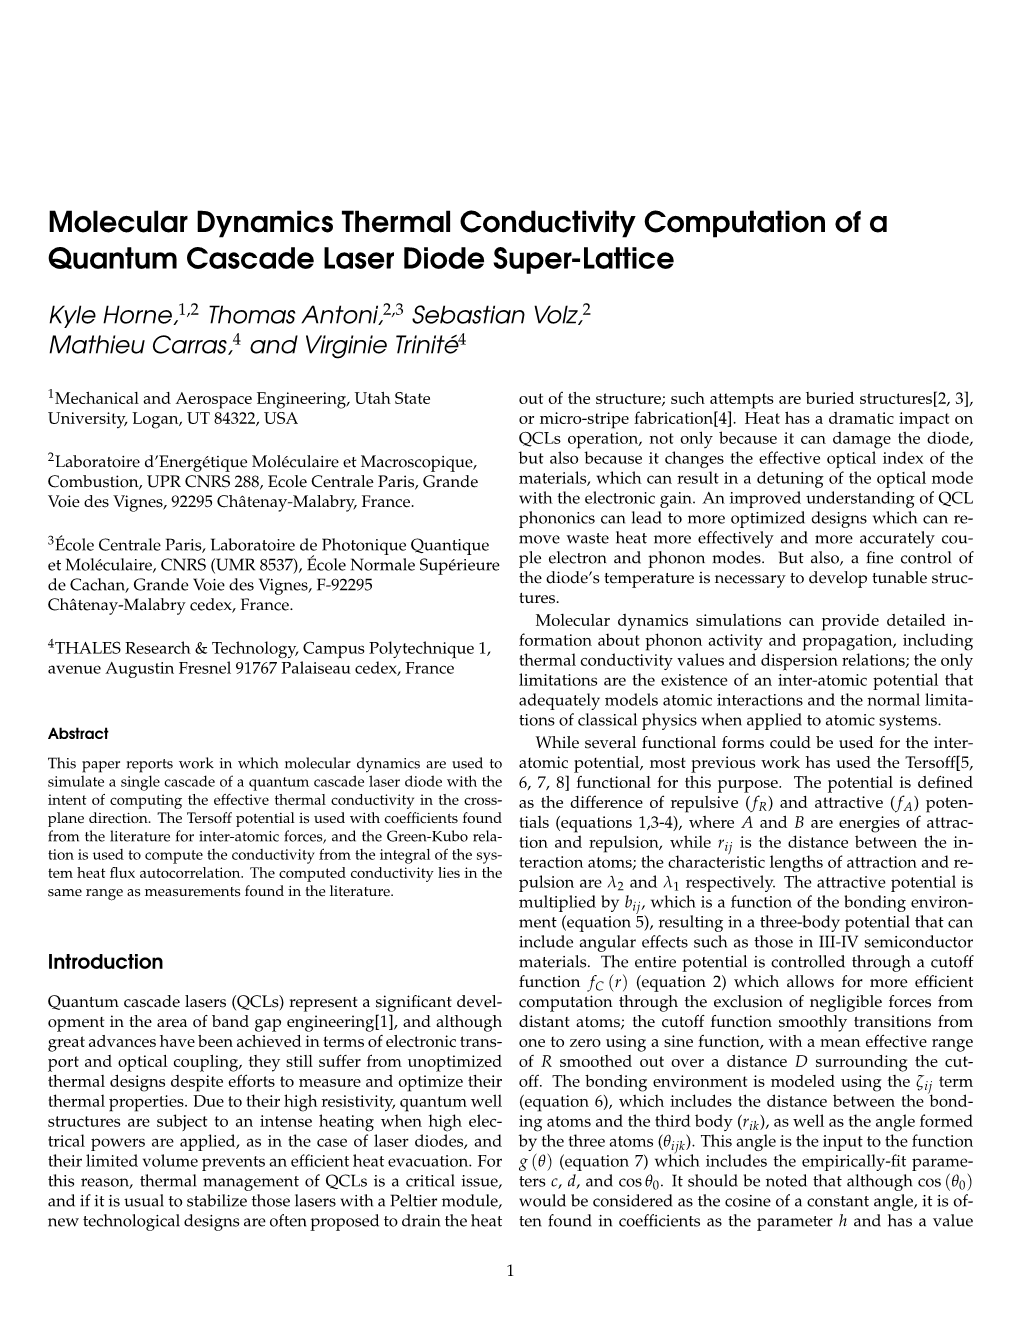 Molecular Dynamics Thermal Conductivity Computation of a Quantum Cascade Laser Diode Super-Lattice